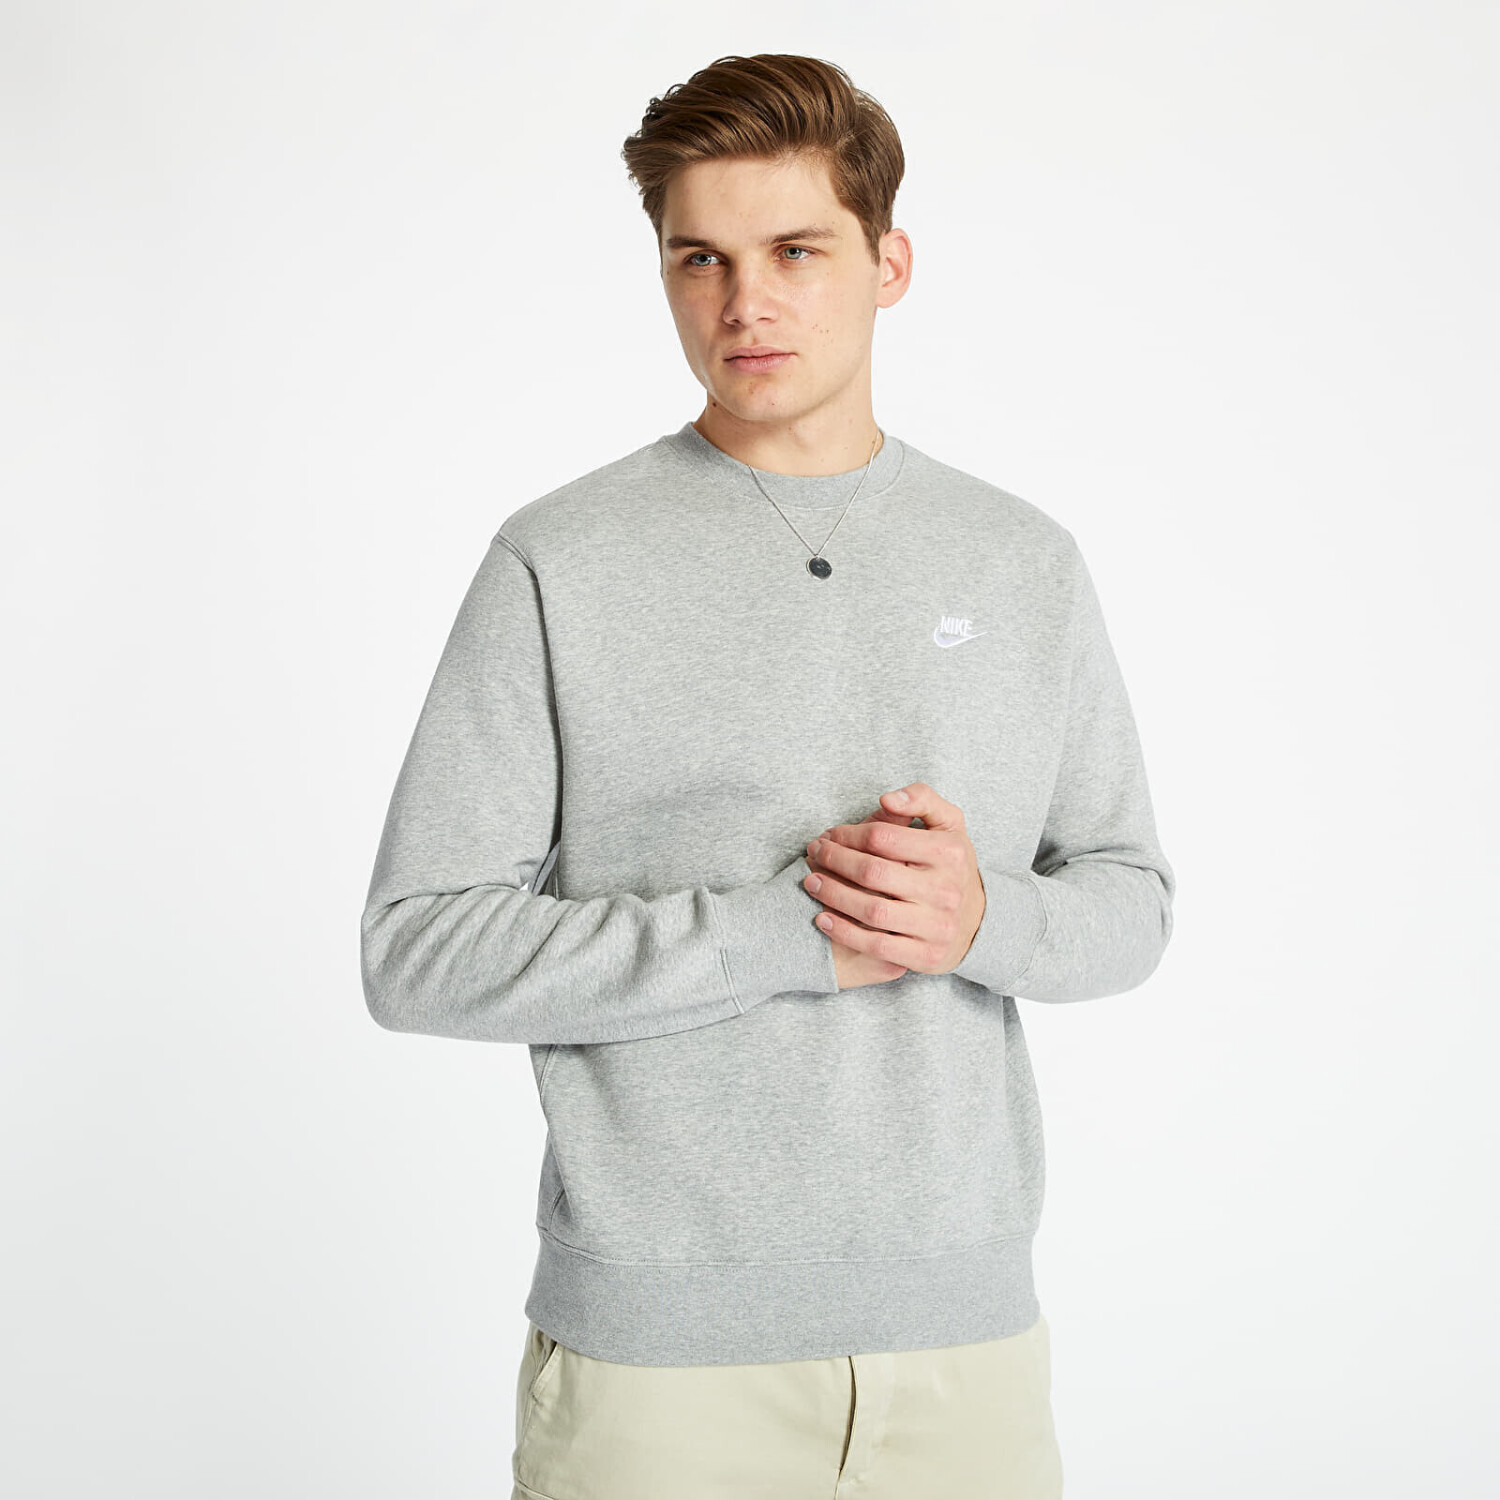 Buy Nike Sportswear Club Sweatshirt dark grey heather / white (BV2662-063)  from £32.99 (Today) – Best Deals on